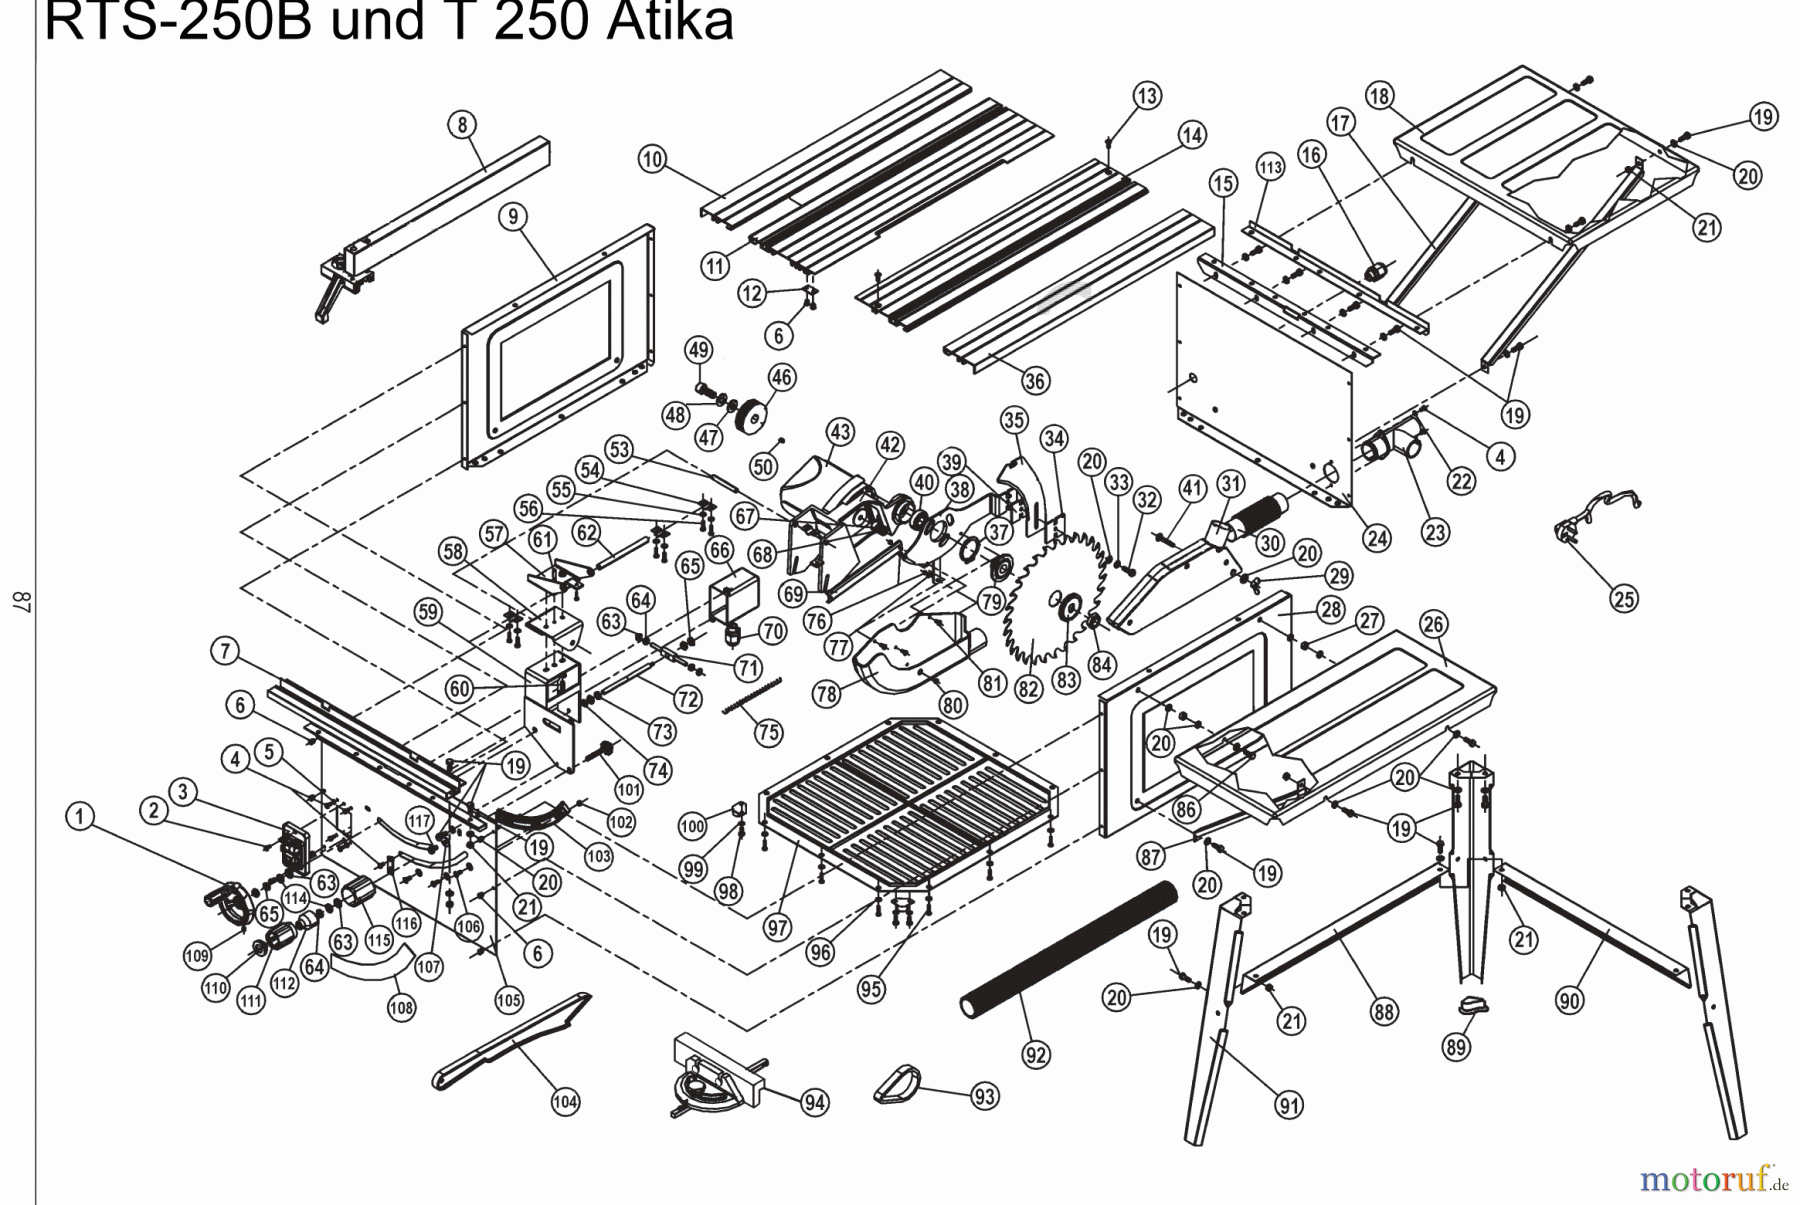  Atika Holz Tischkreissägen T 205